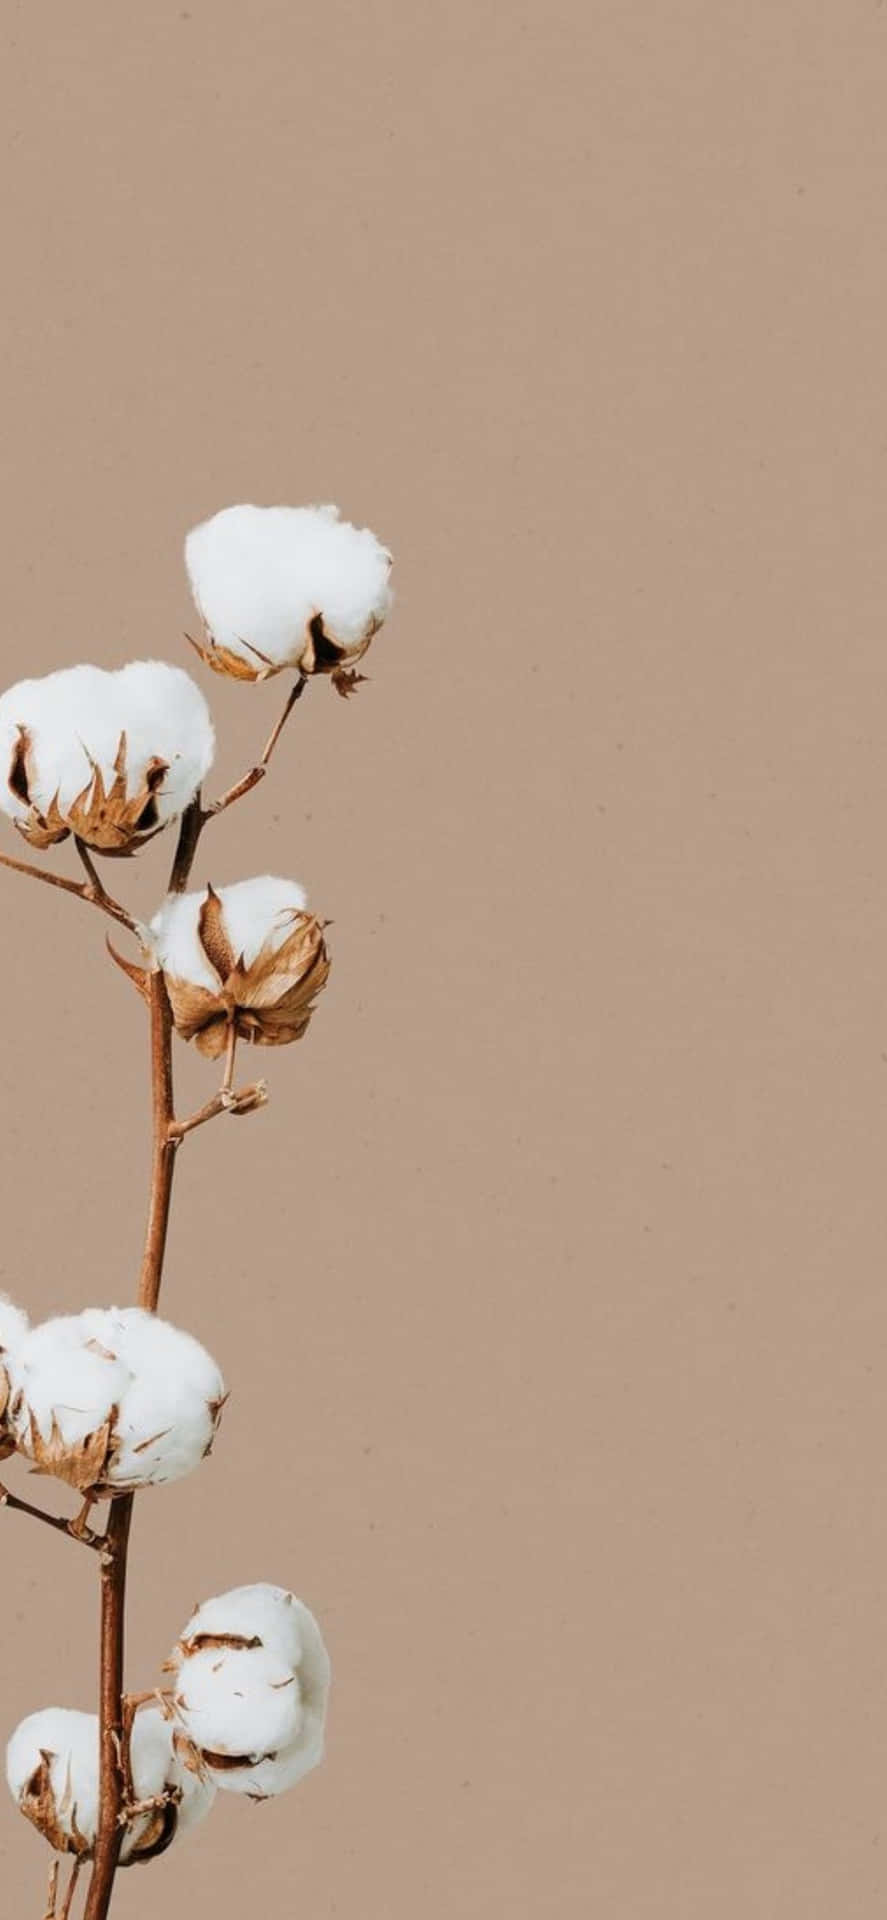 iPhone X Minimal White Cotton Flowers Background